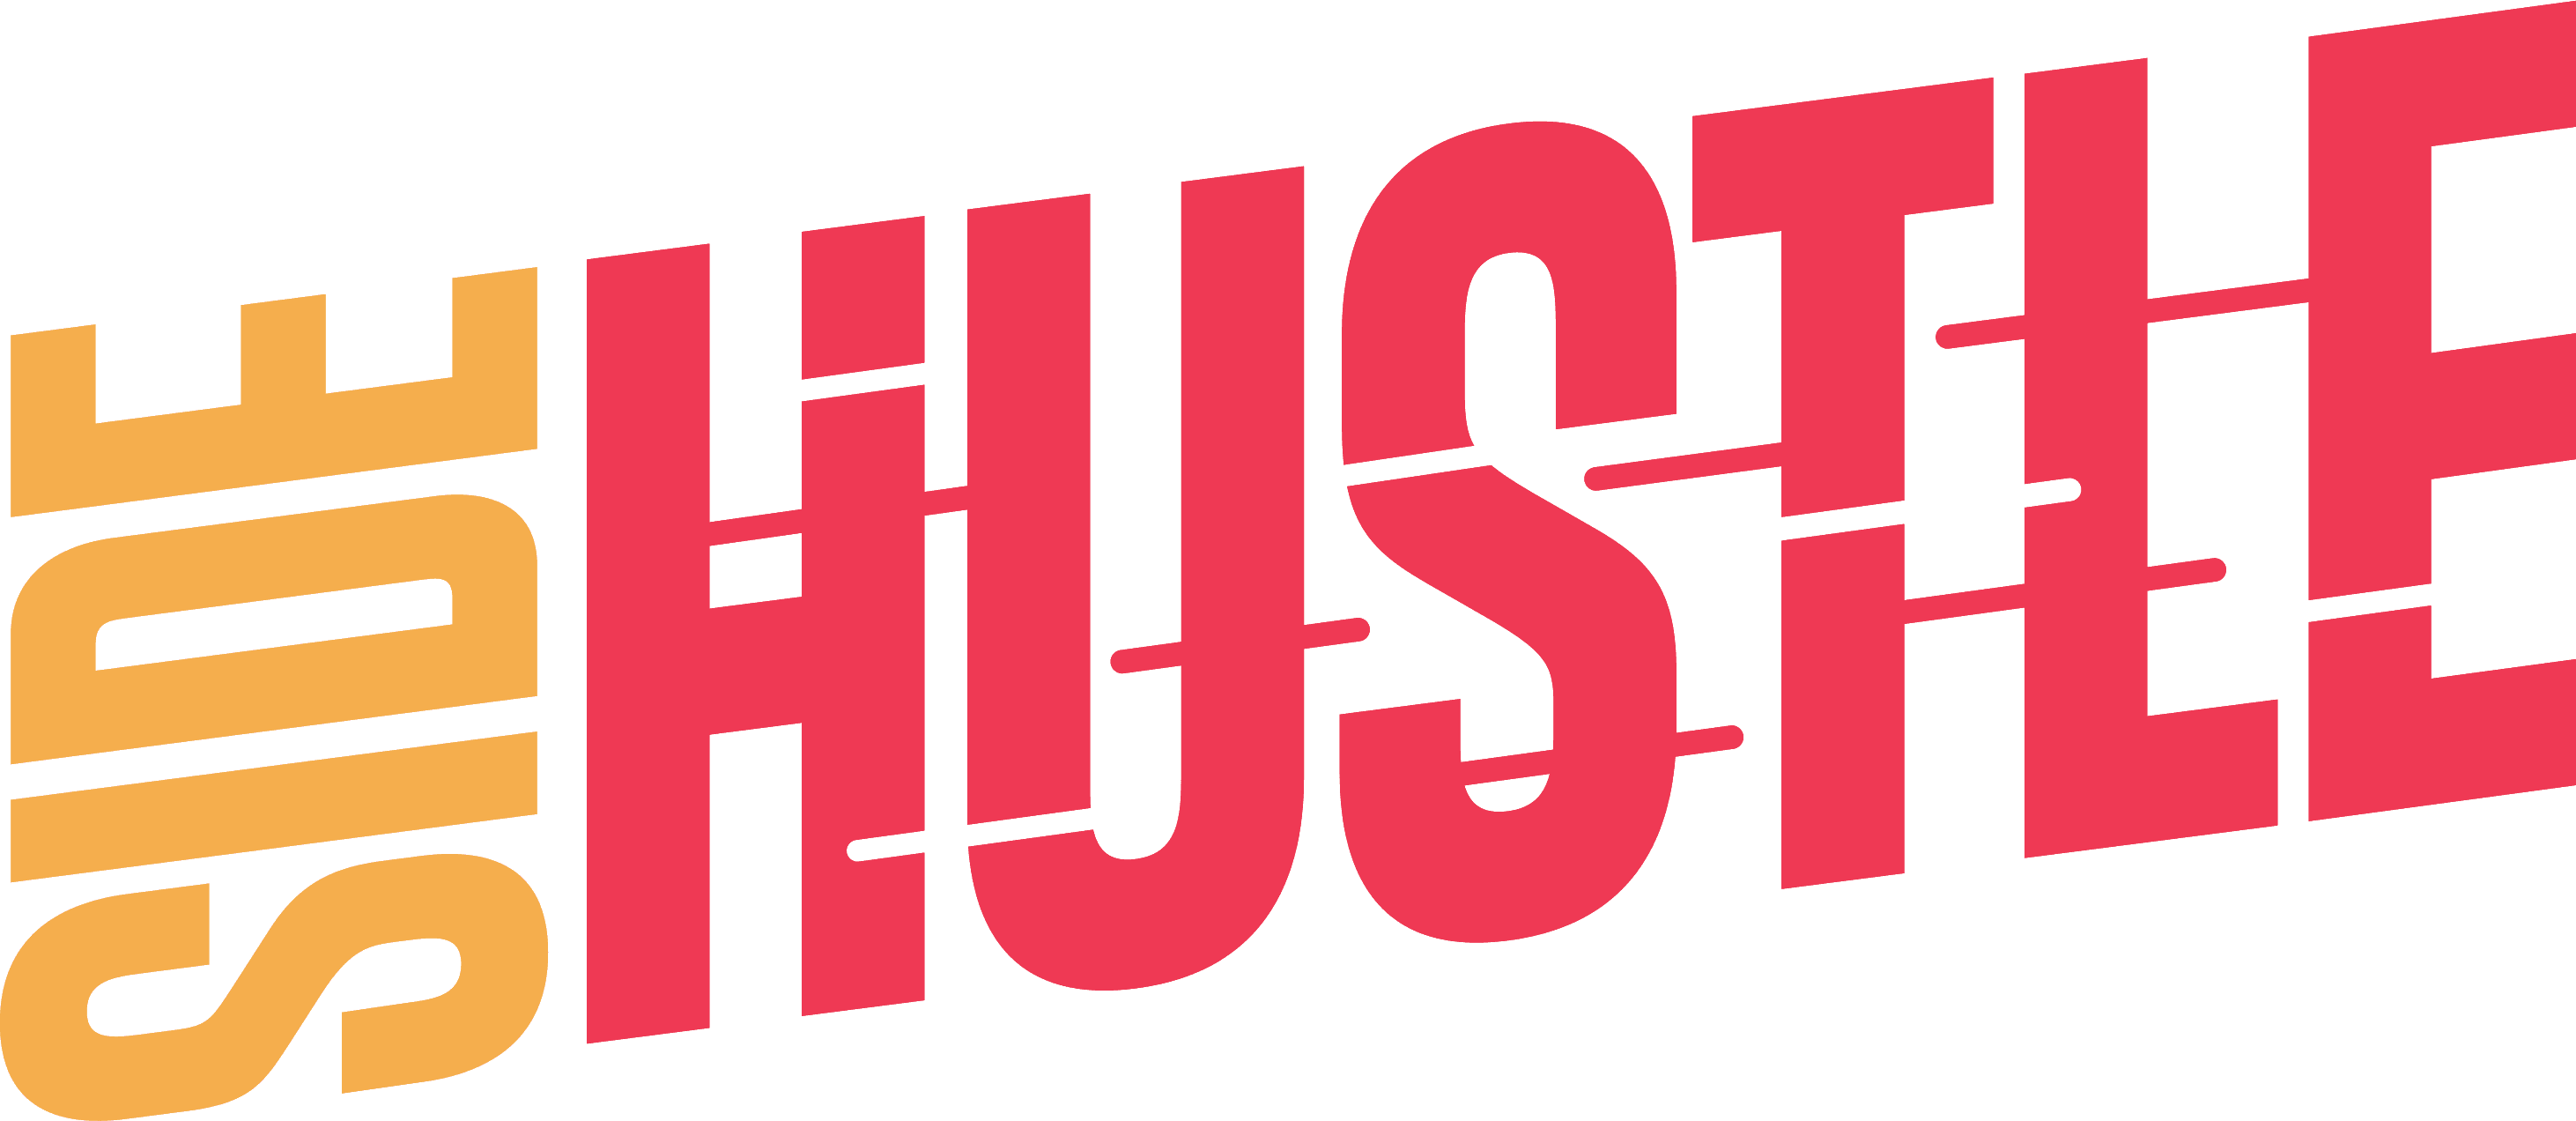 Side Hustle logo